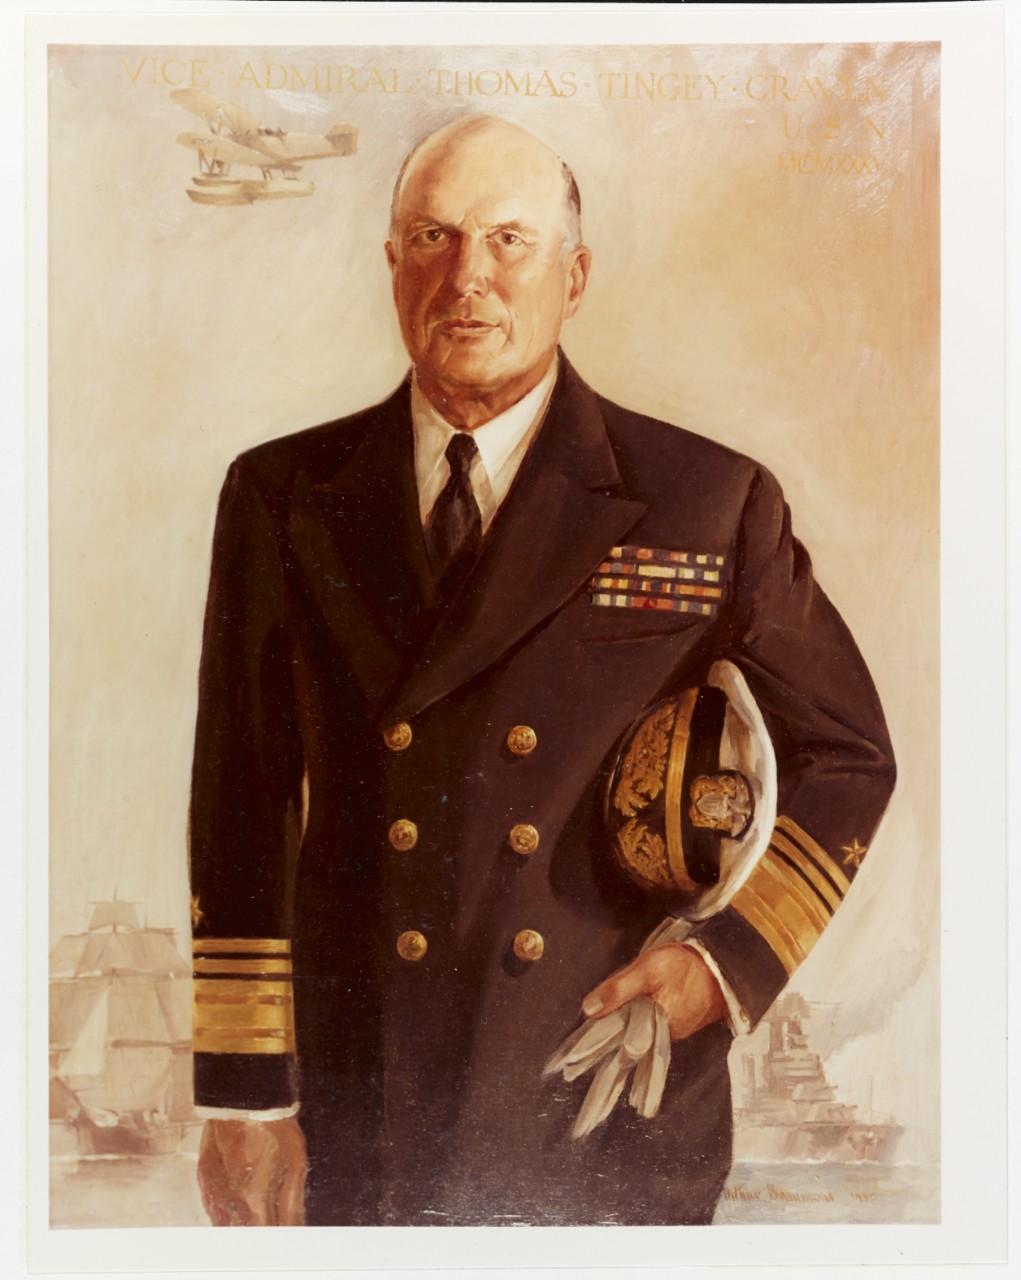 Vice Admiral Thomas Tingey Craven, USN